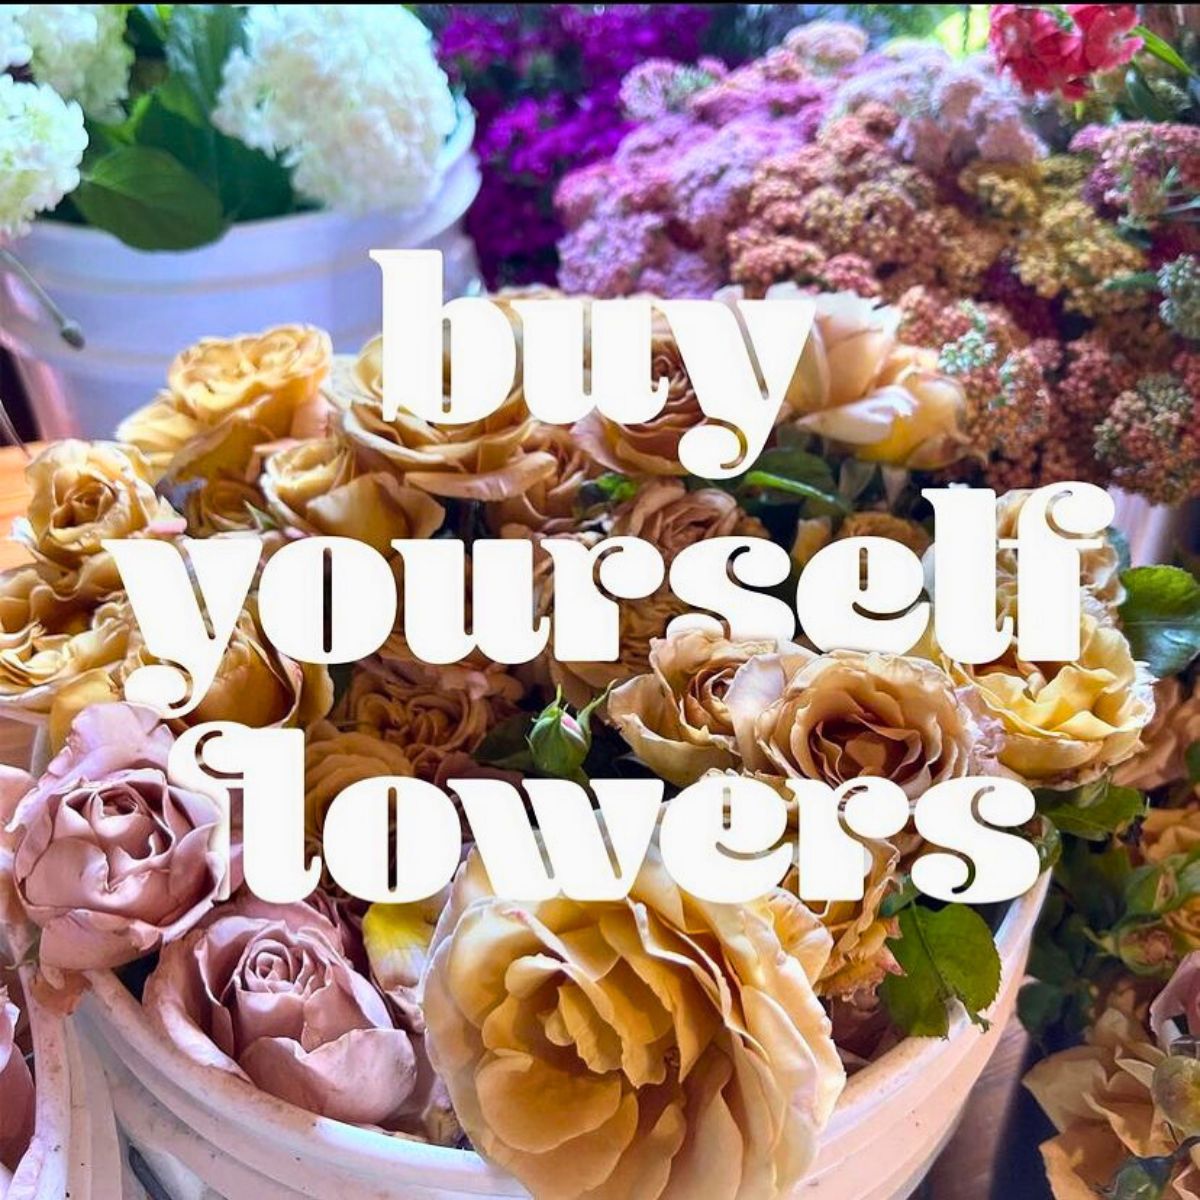 Buy yourself flowers